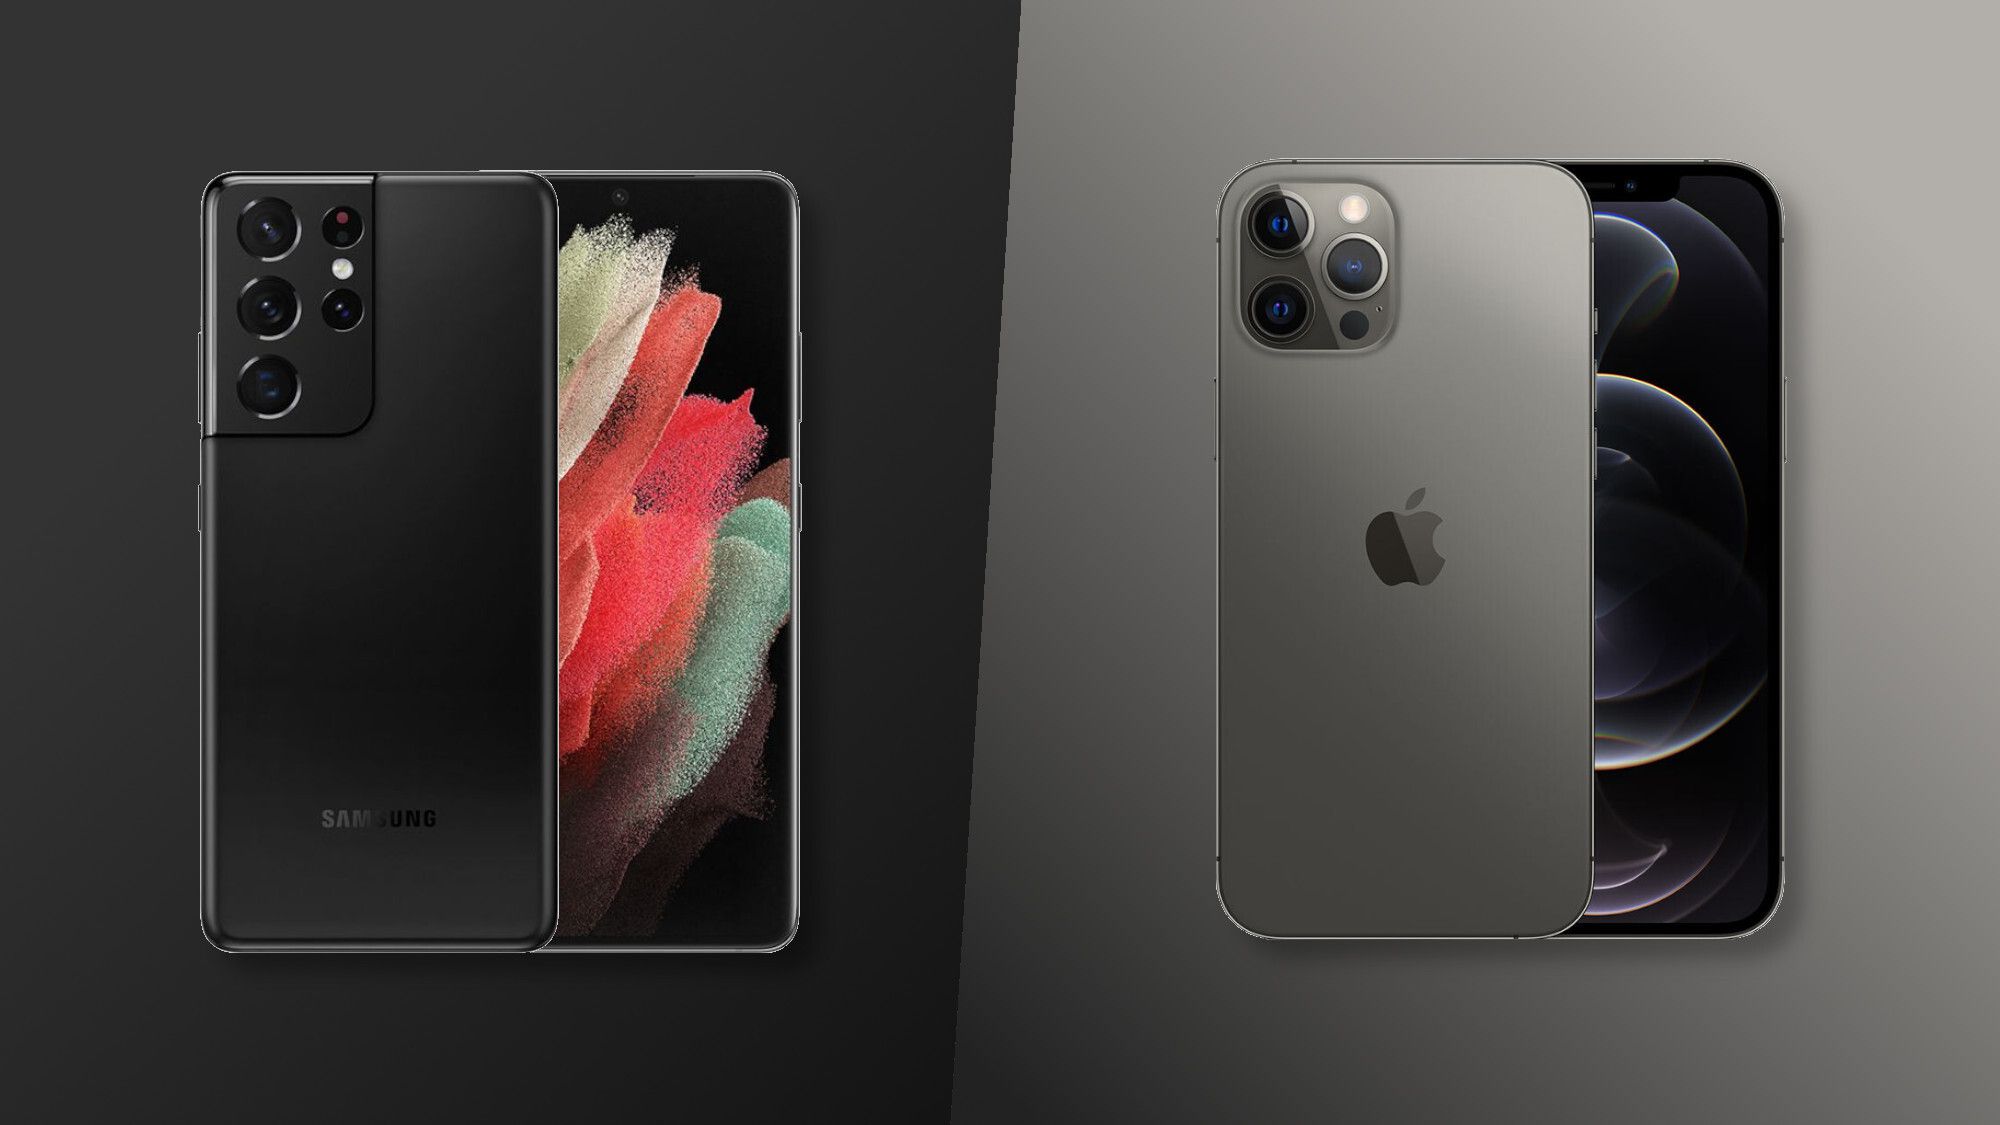 Duelo de tops: entre Galaxy S21 Ultra e iPhone 12 Pro, quem leva a